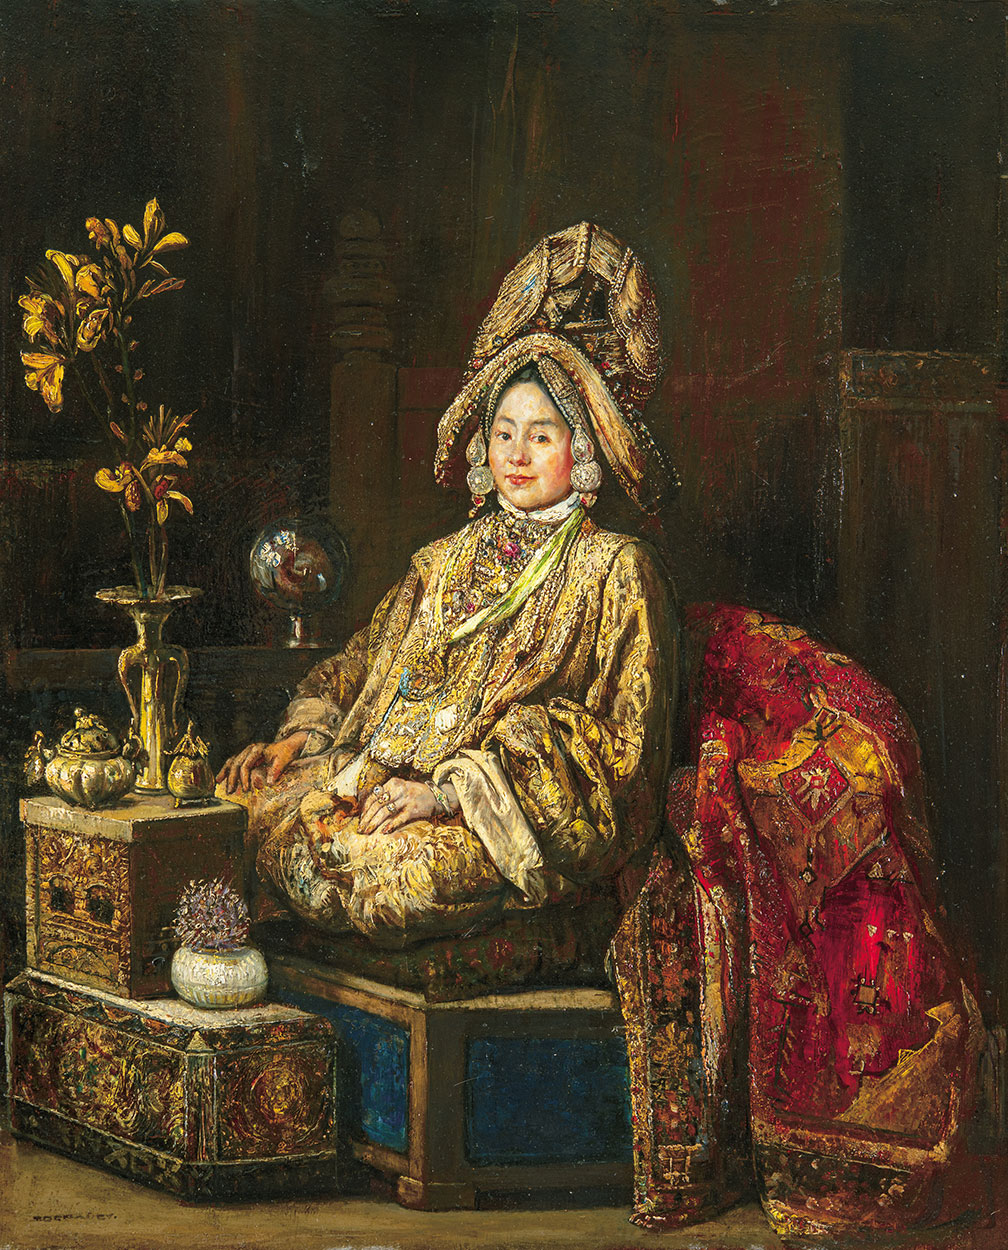 Tornai Gyula (1851-1928) A Tibetan Woman, before 1909